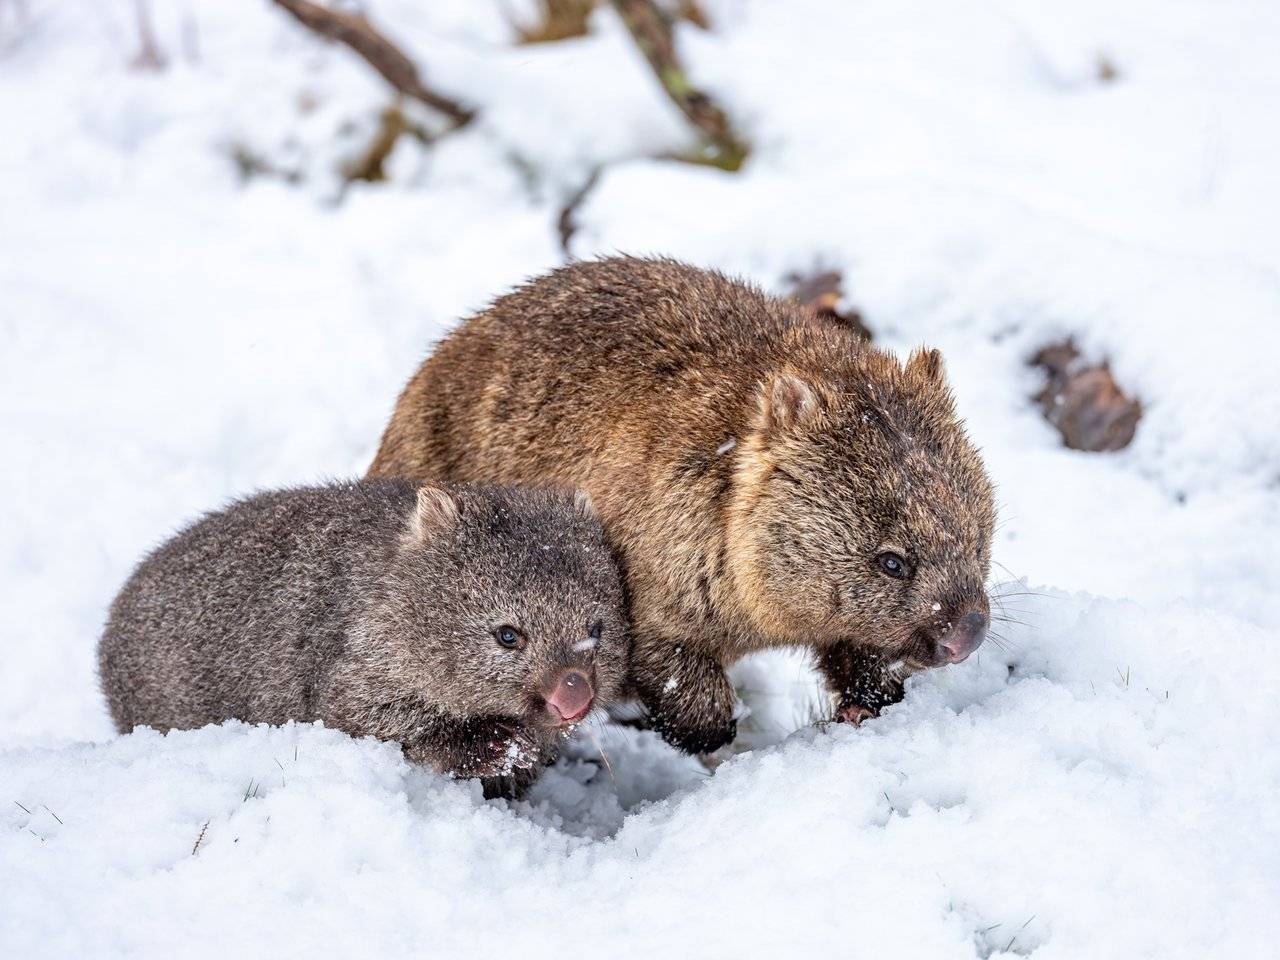 Mombat & Sonbat (not really, they are wild wombats)